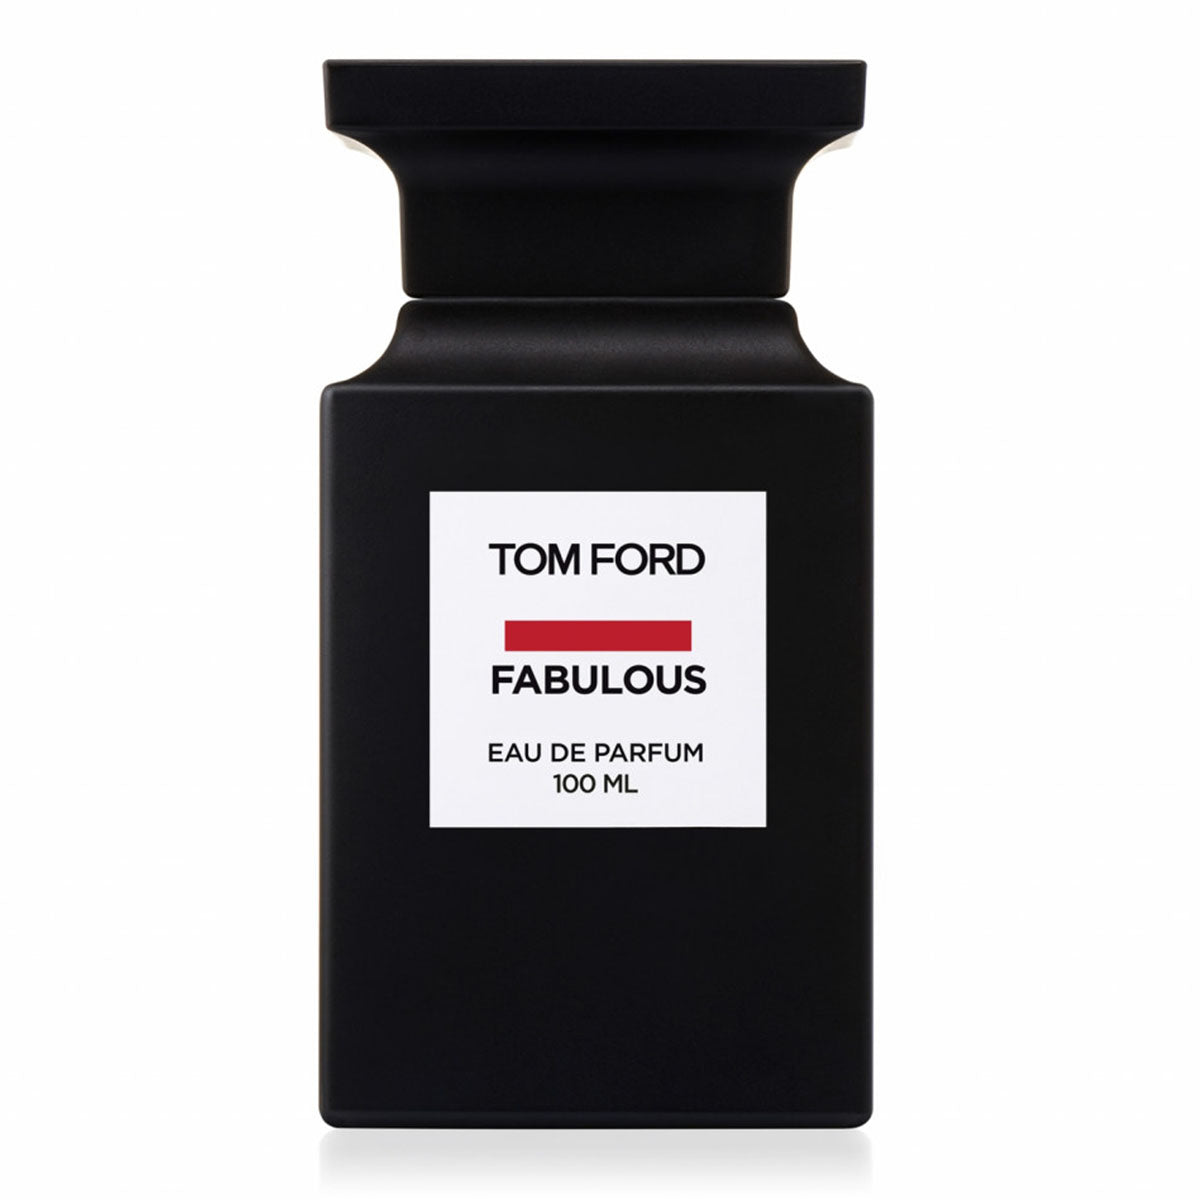 Get Tom Ford Fabulous Perfume Edp 100ml in Pakistan - Allurebeauty ...